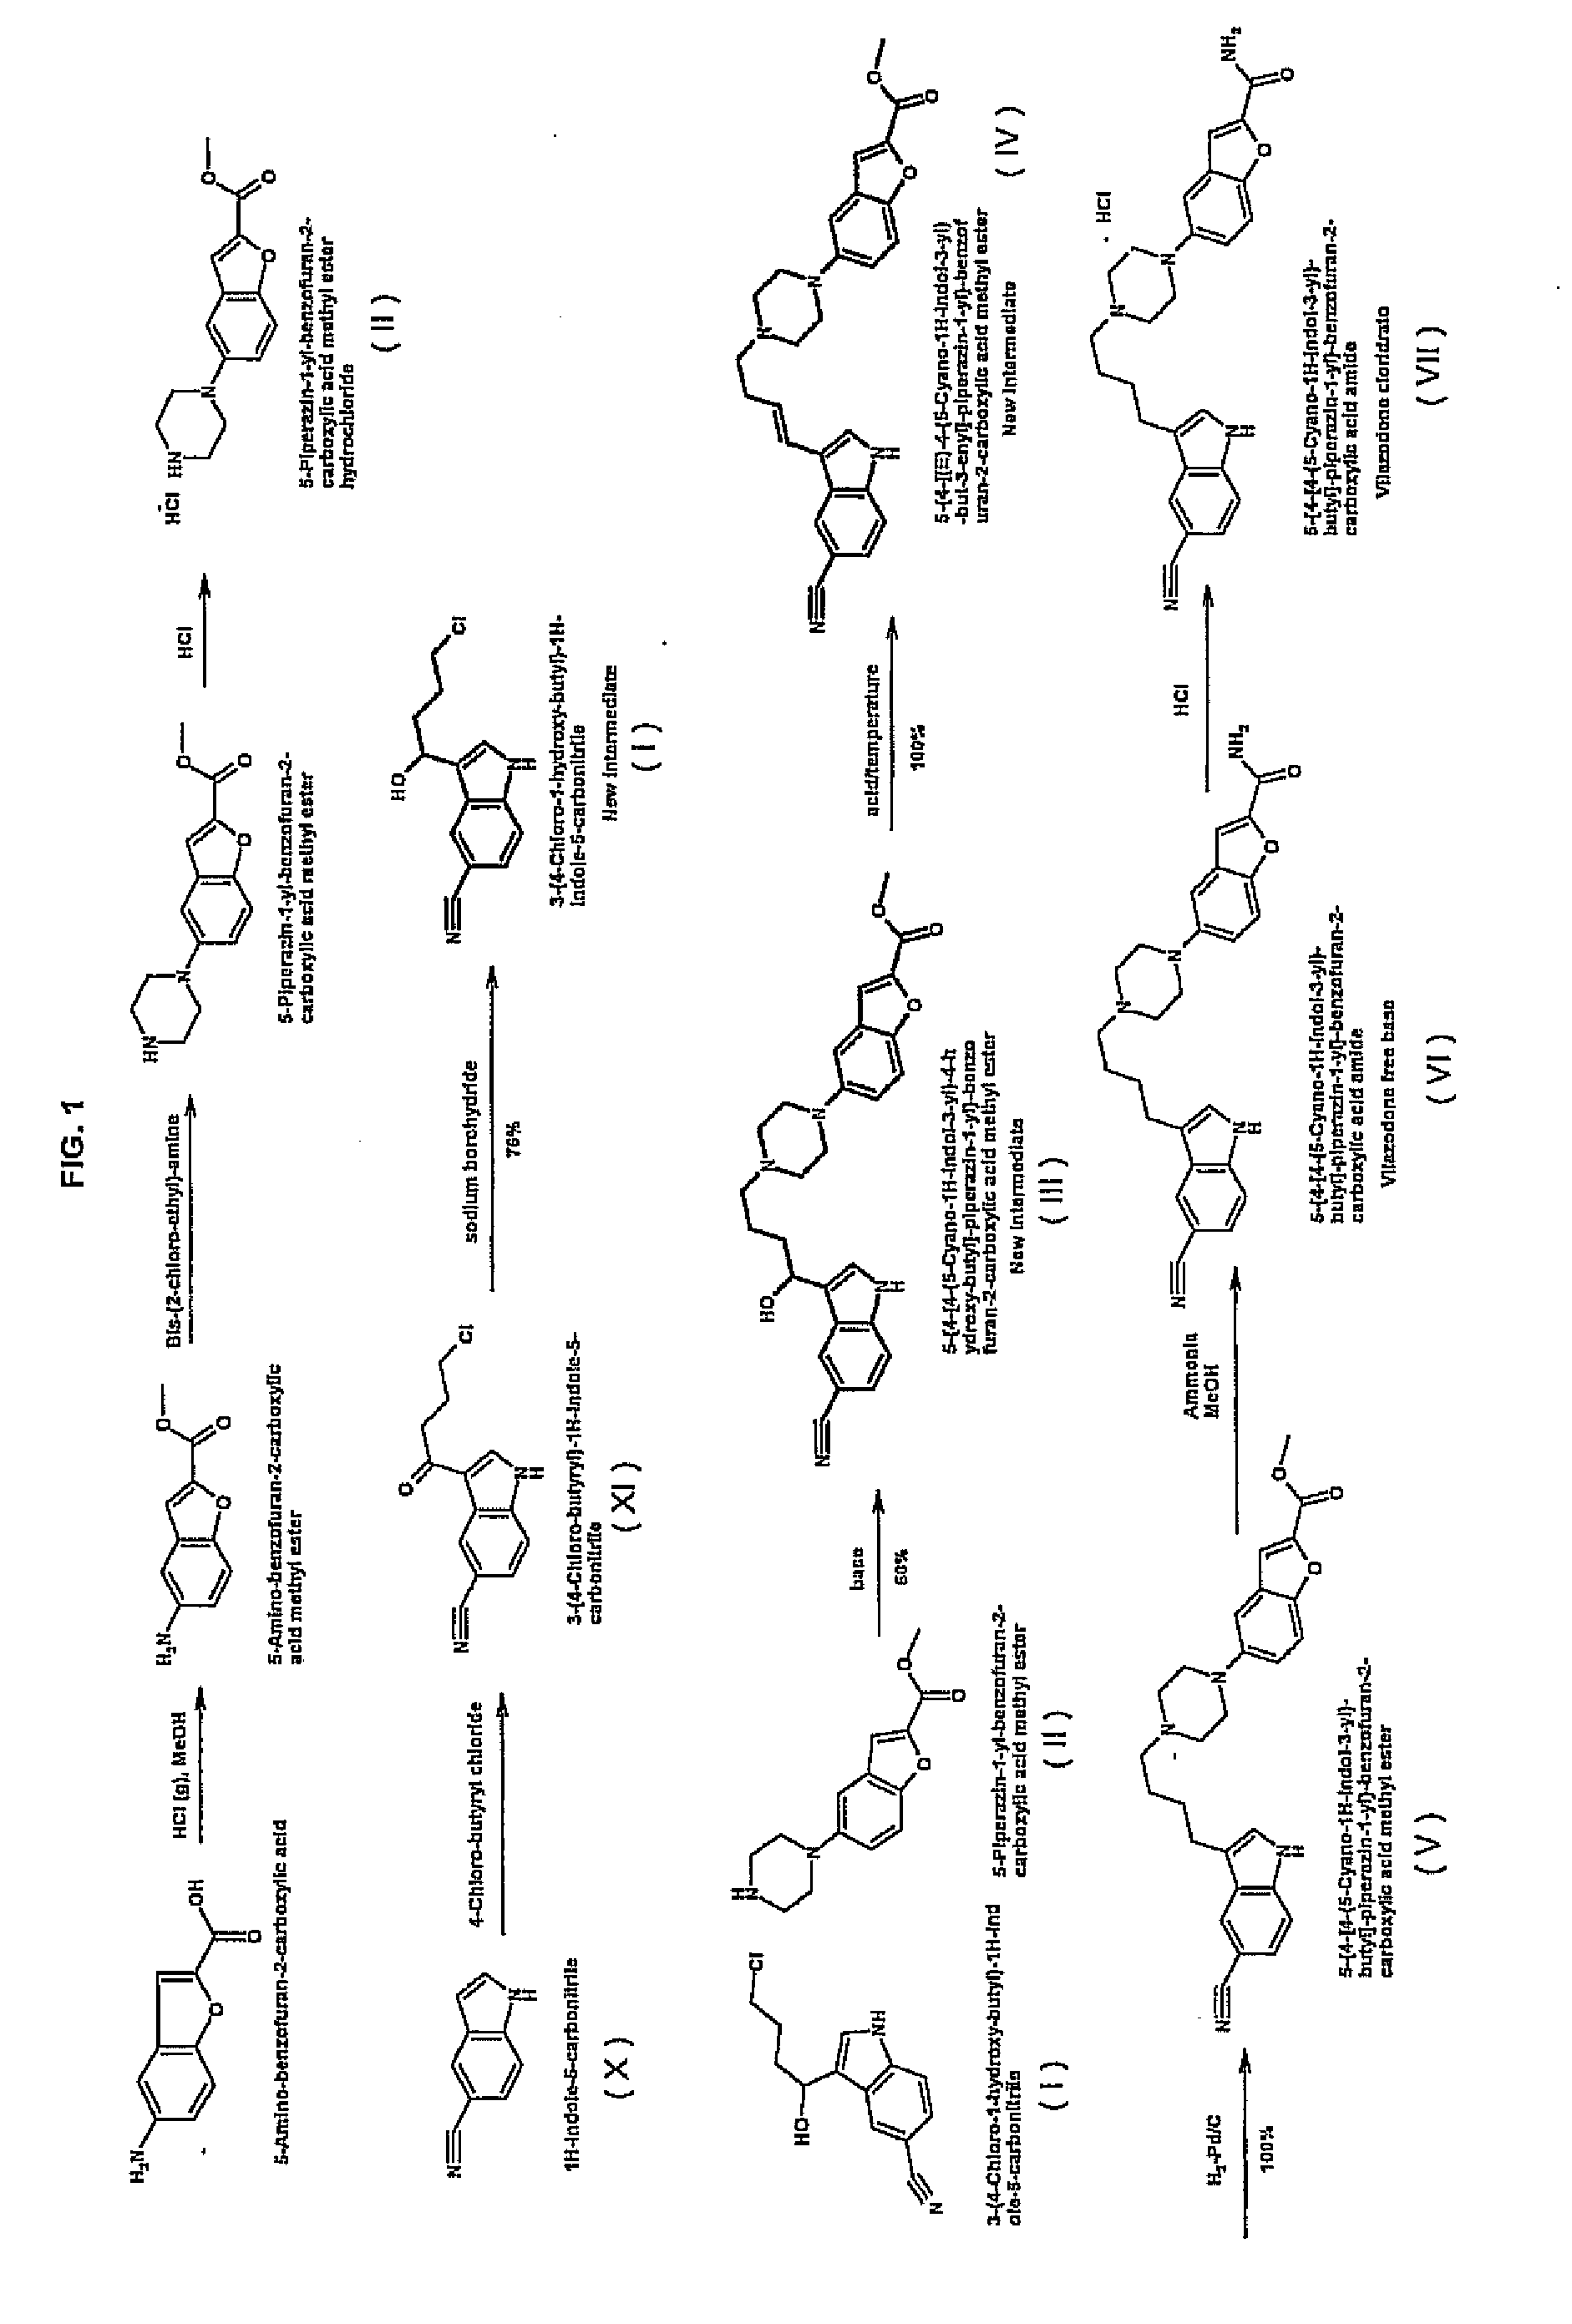 Process for preparing vilazodone hydrochloride